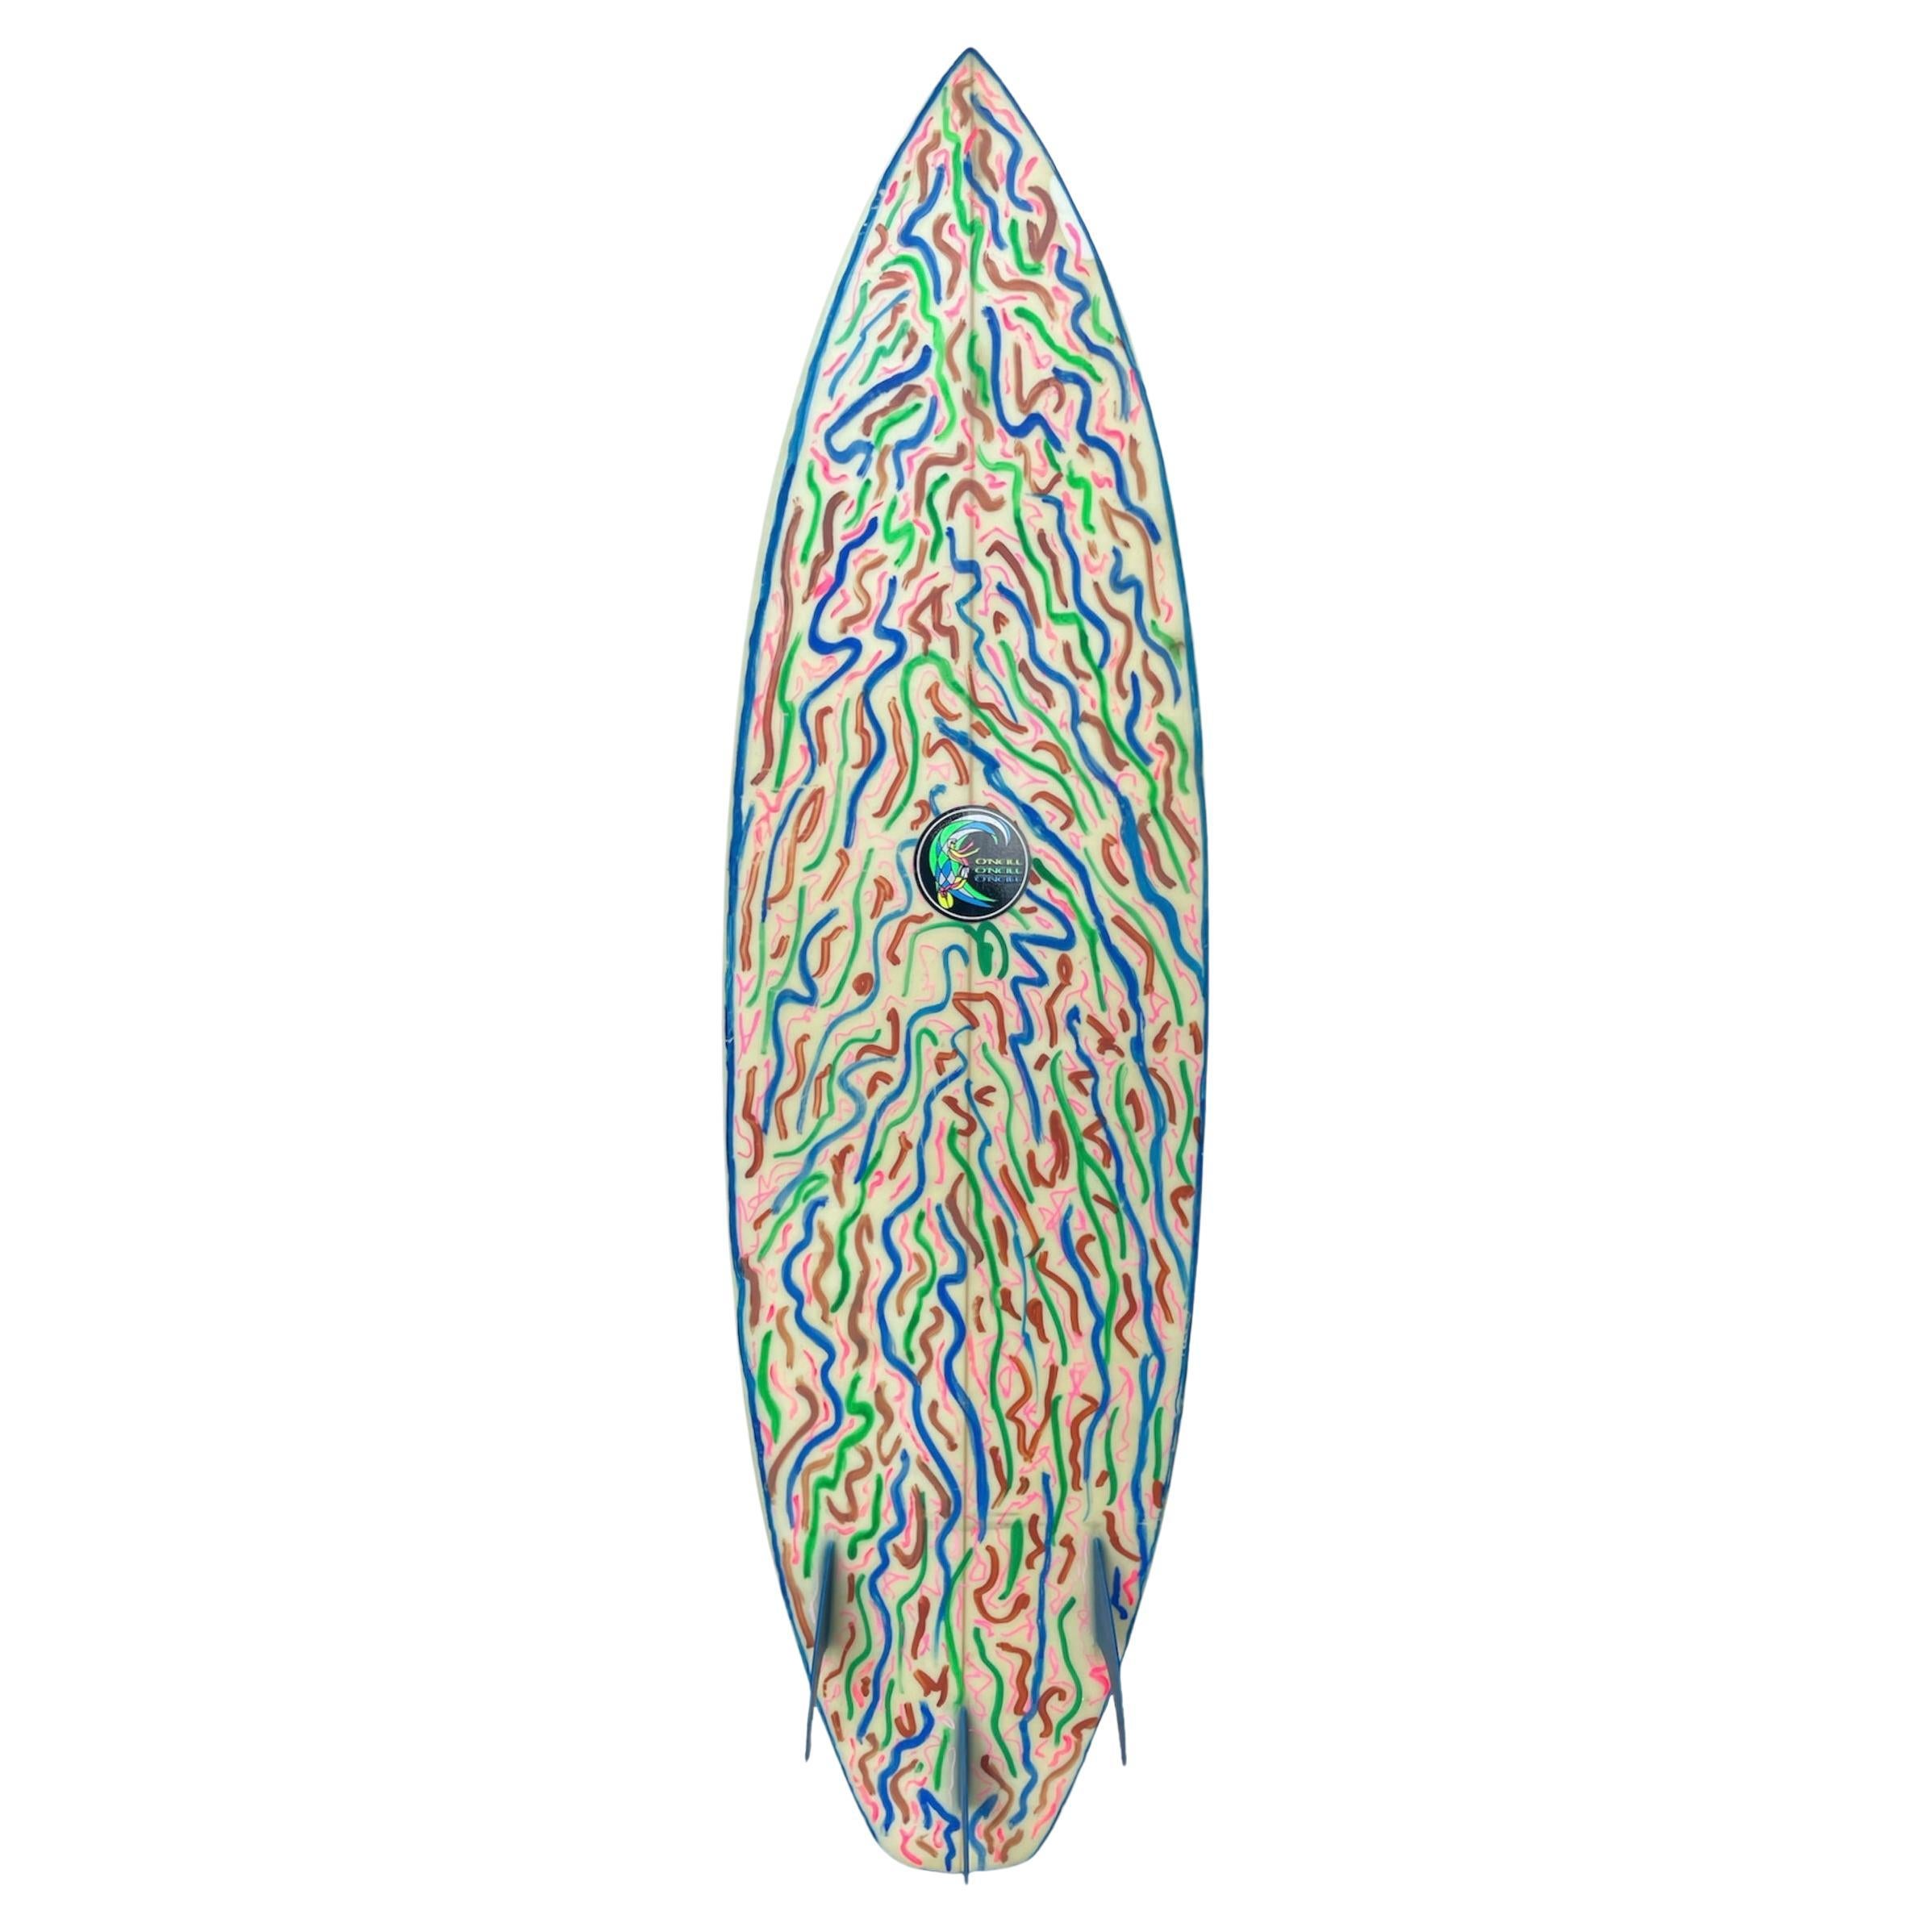 3X World Champion Joel Tudor’s personal surfboard by Stu Kenson